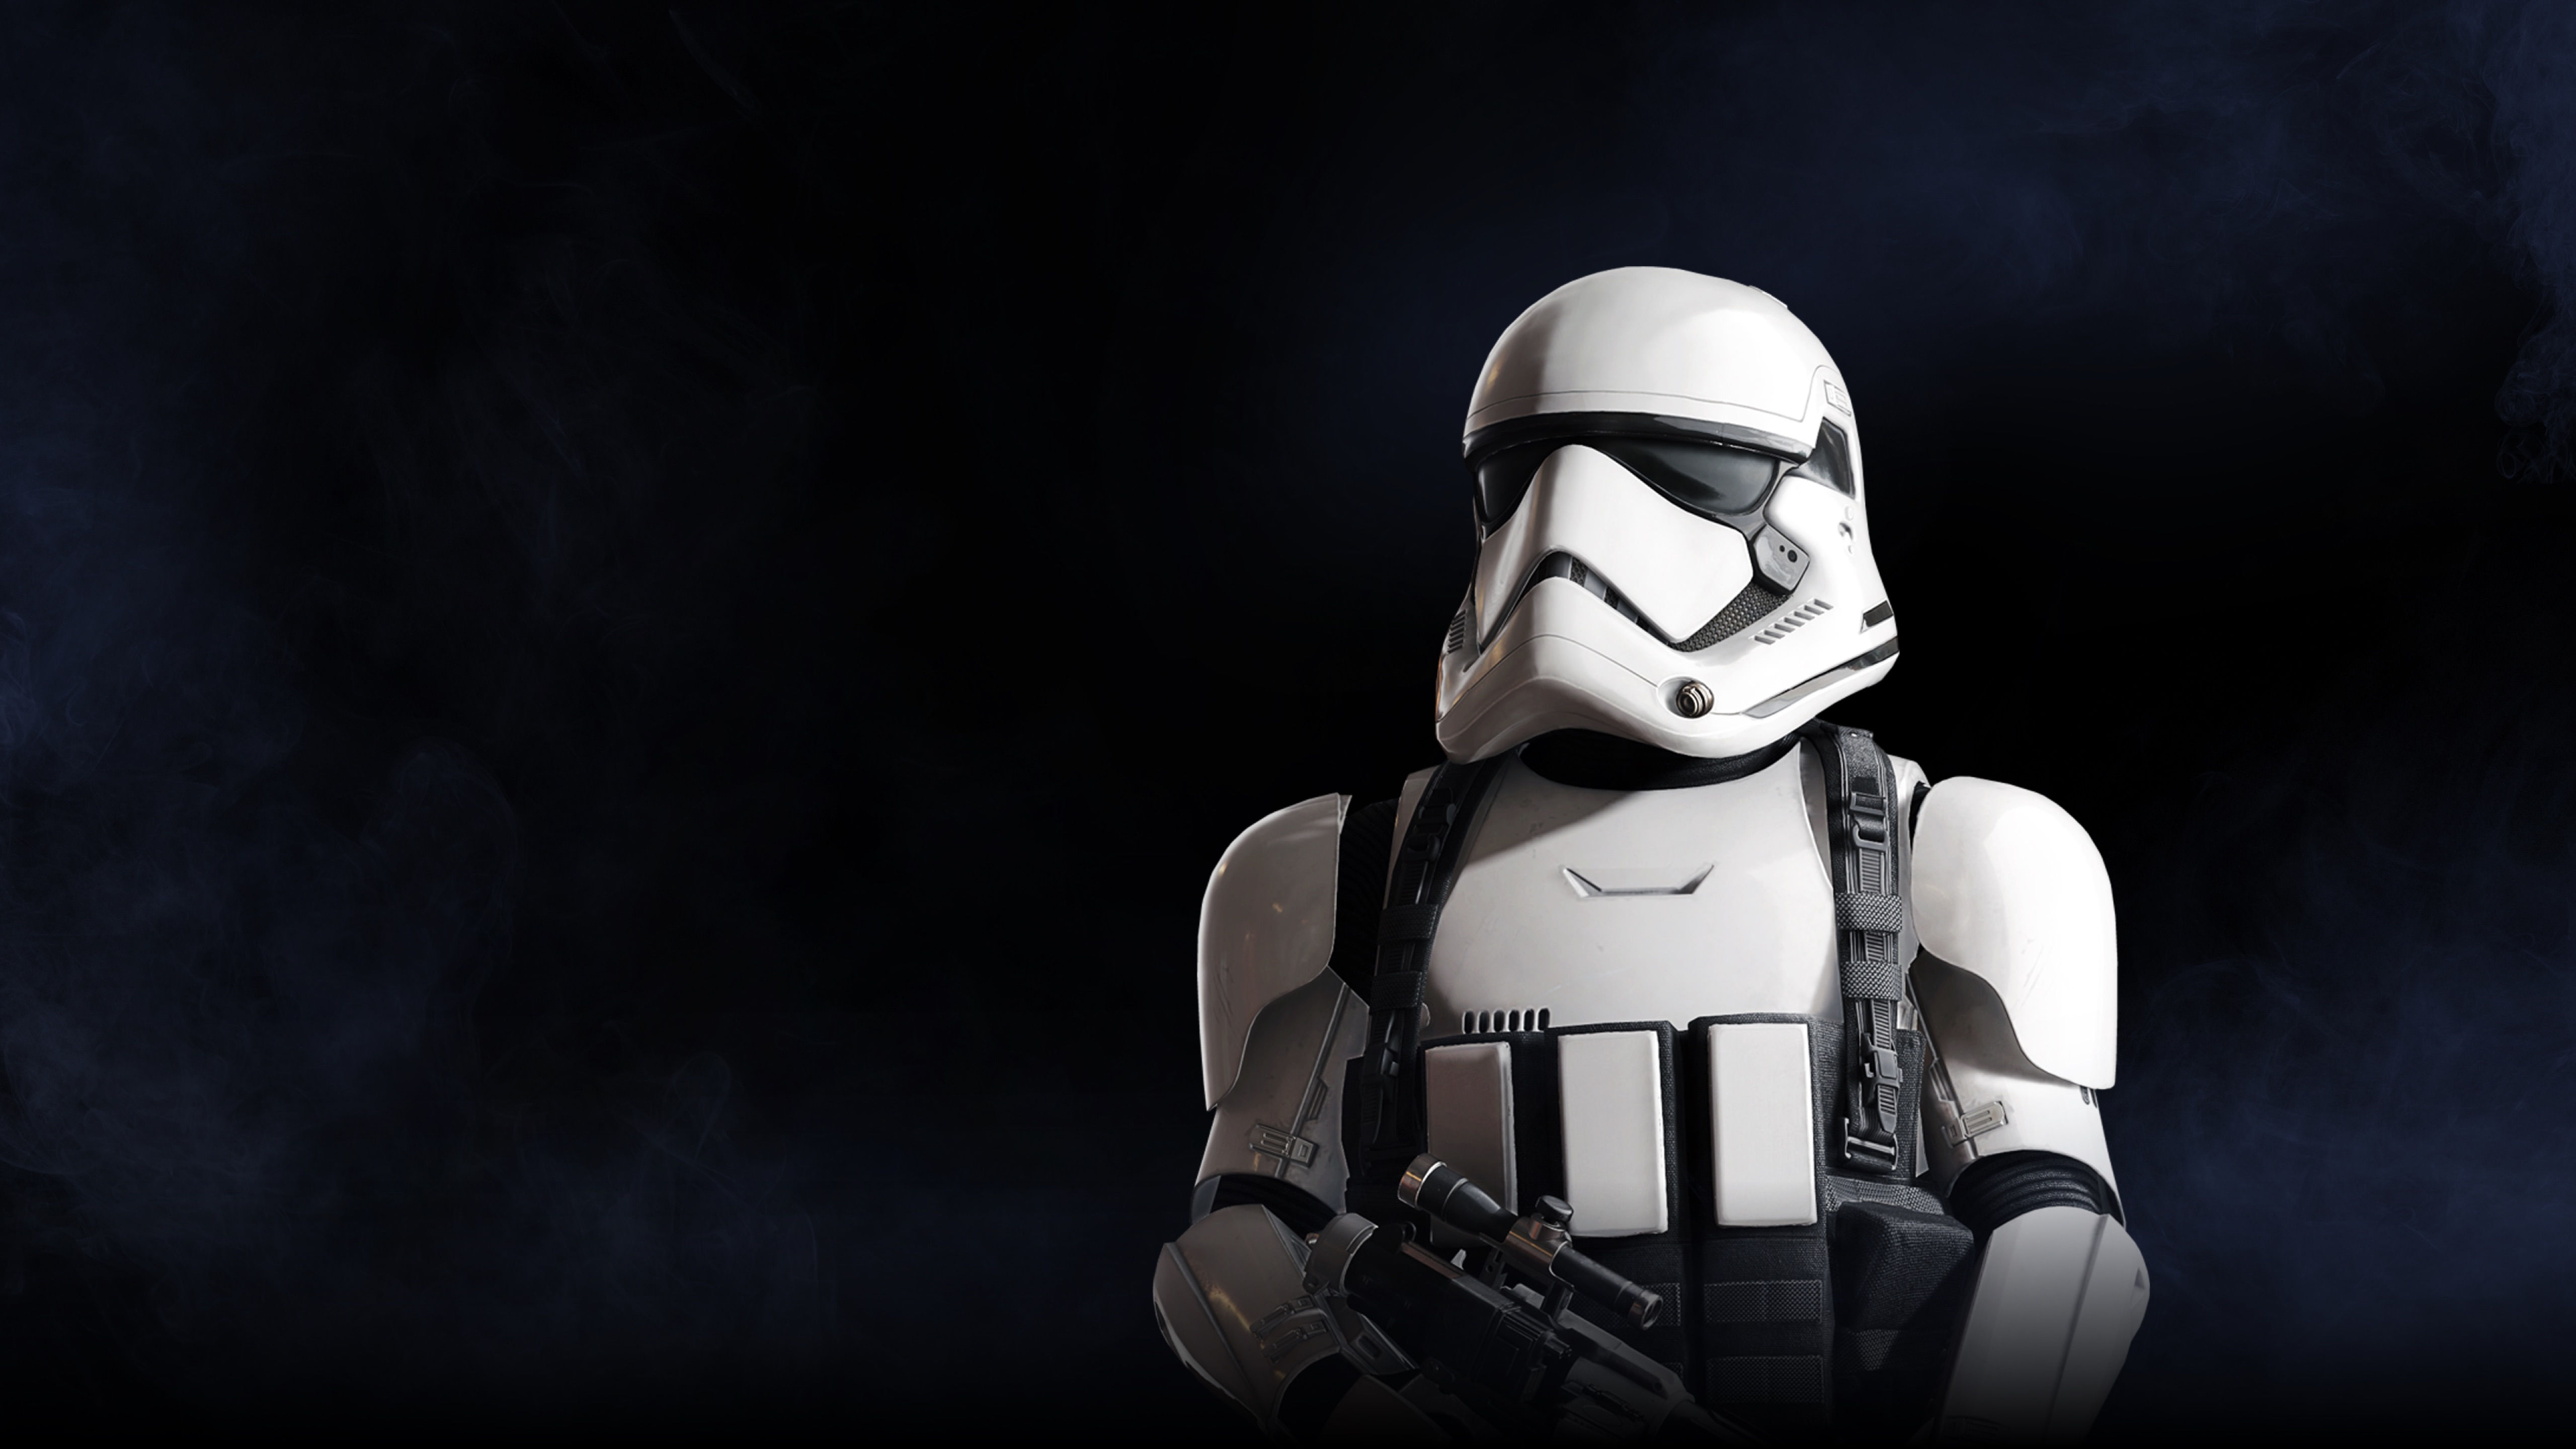 Video Game Star Wars Battlefront II (2017) HD Wallpaper | Background Image